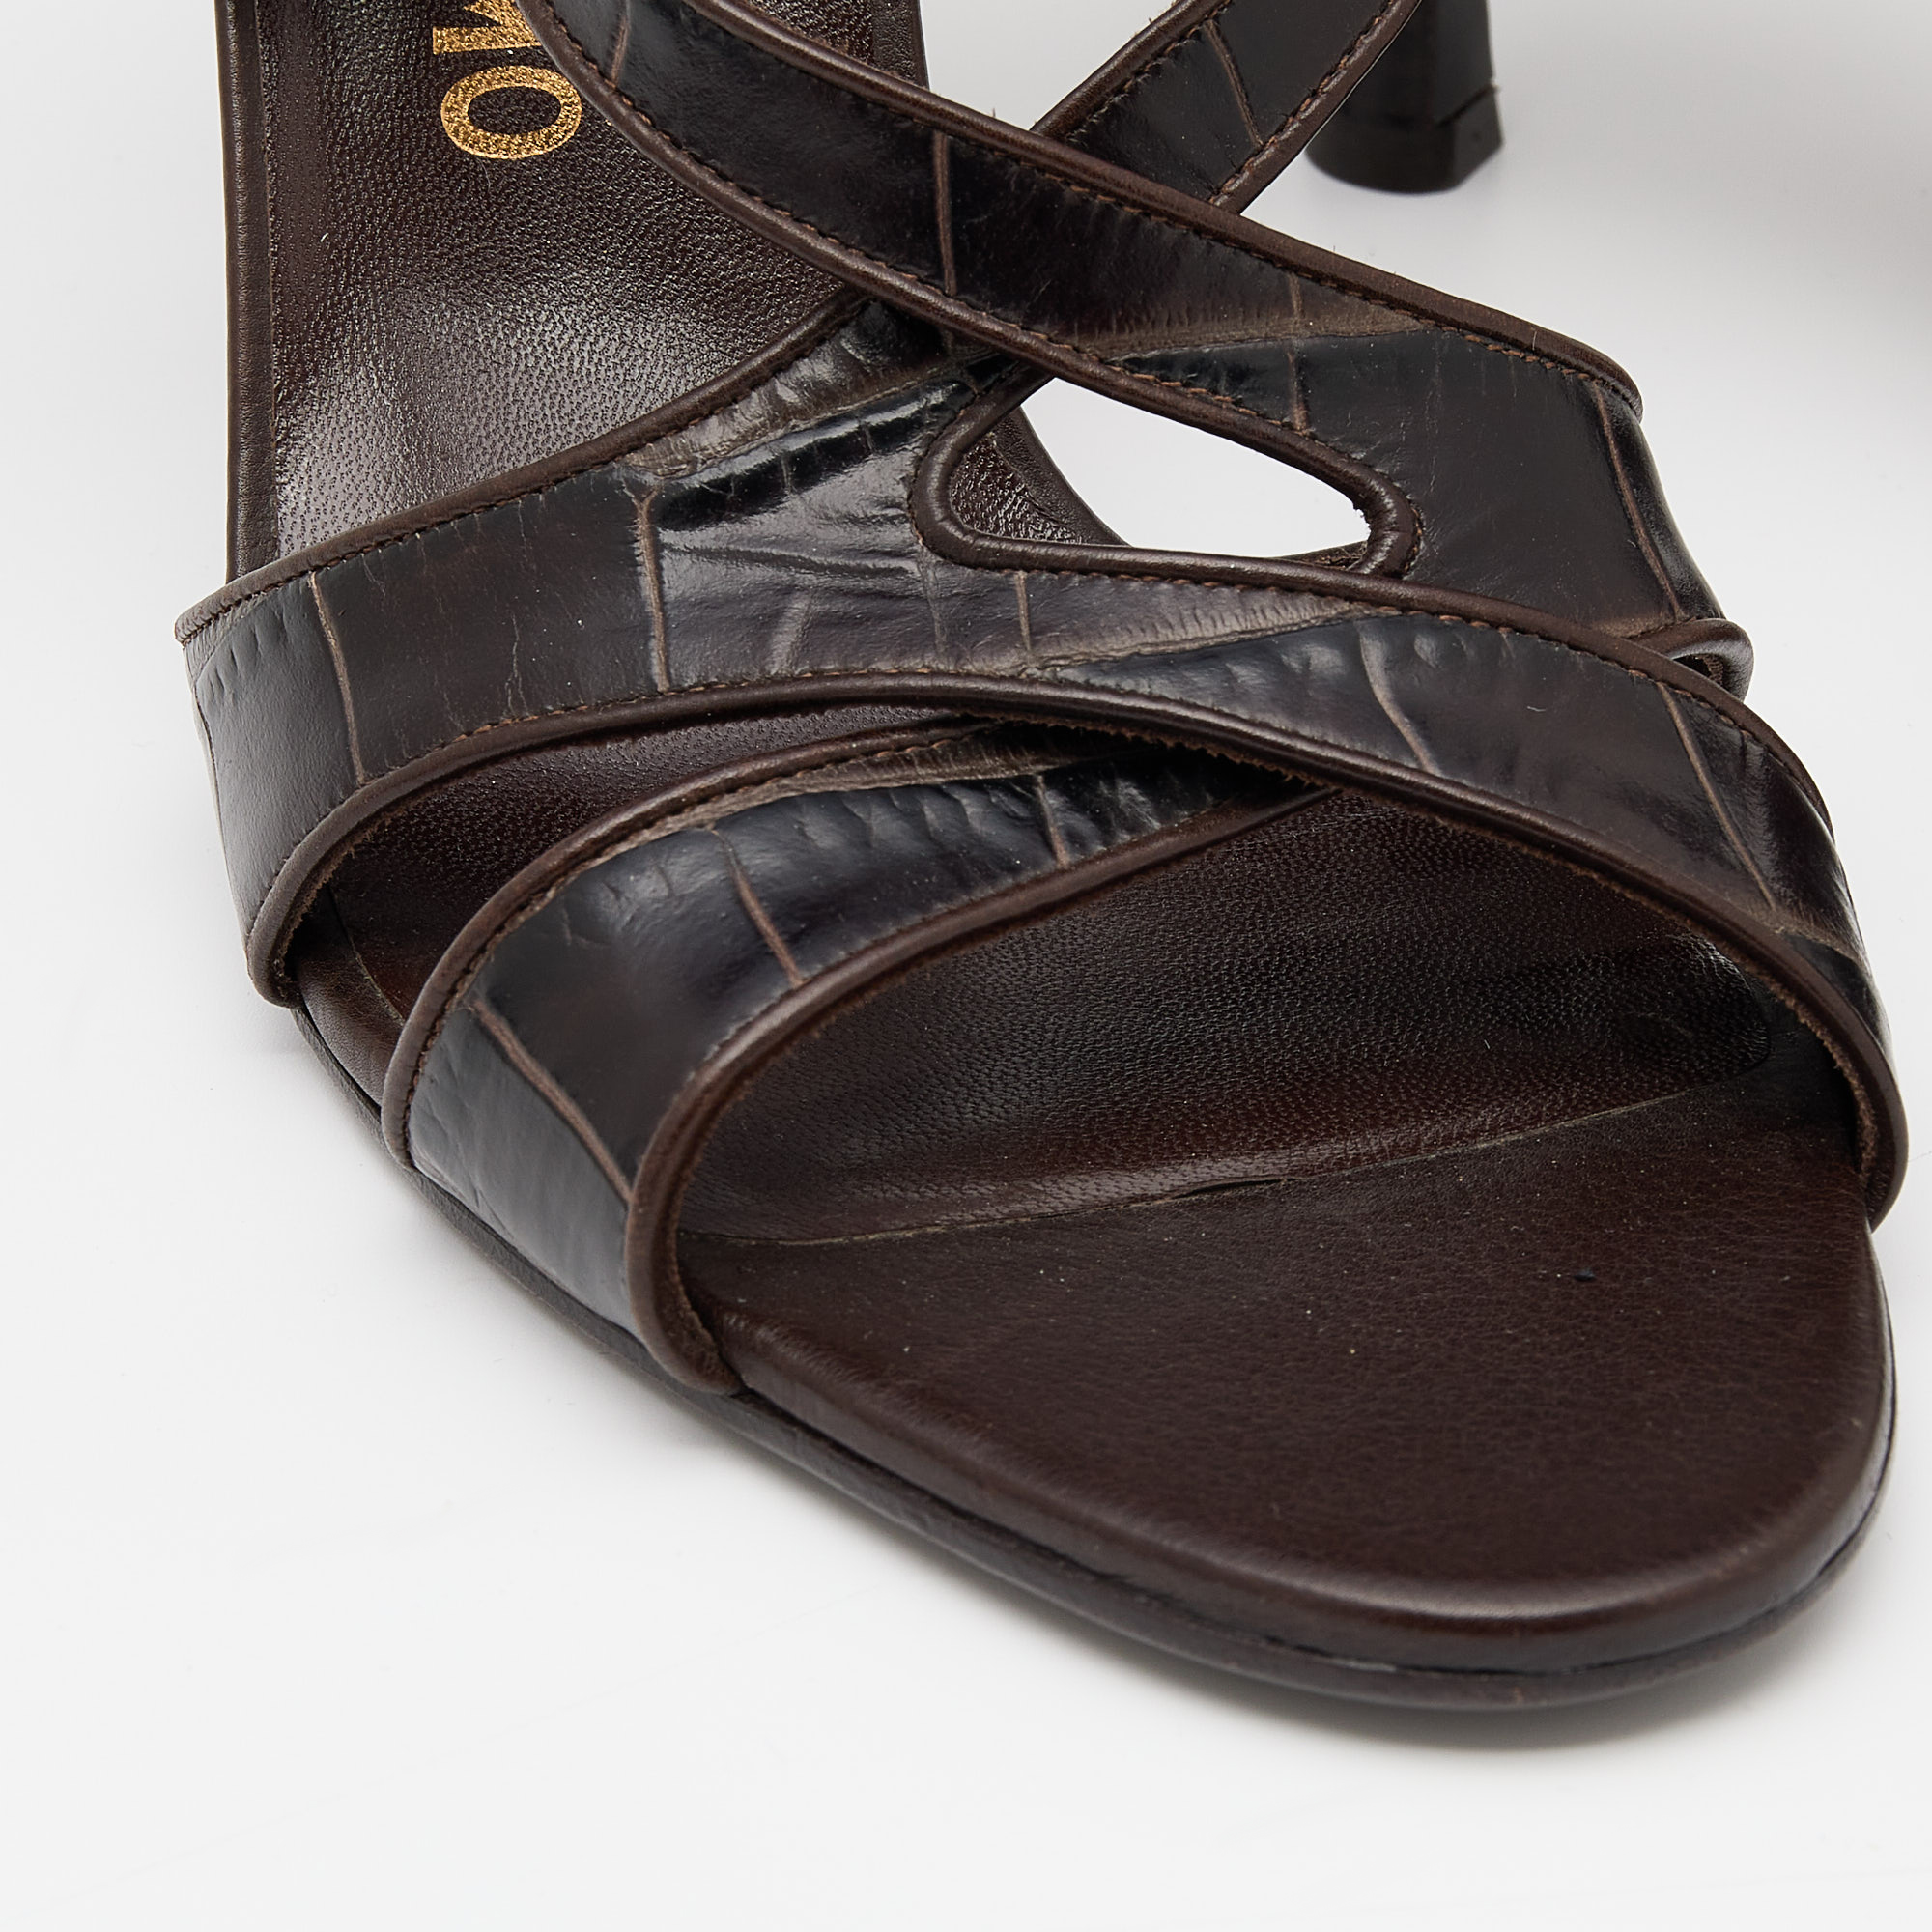 Salvatore Ferragamo Dark Brown Croc Embossed Leather Slingback Sandals Size 40